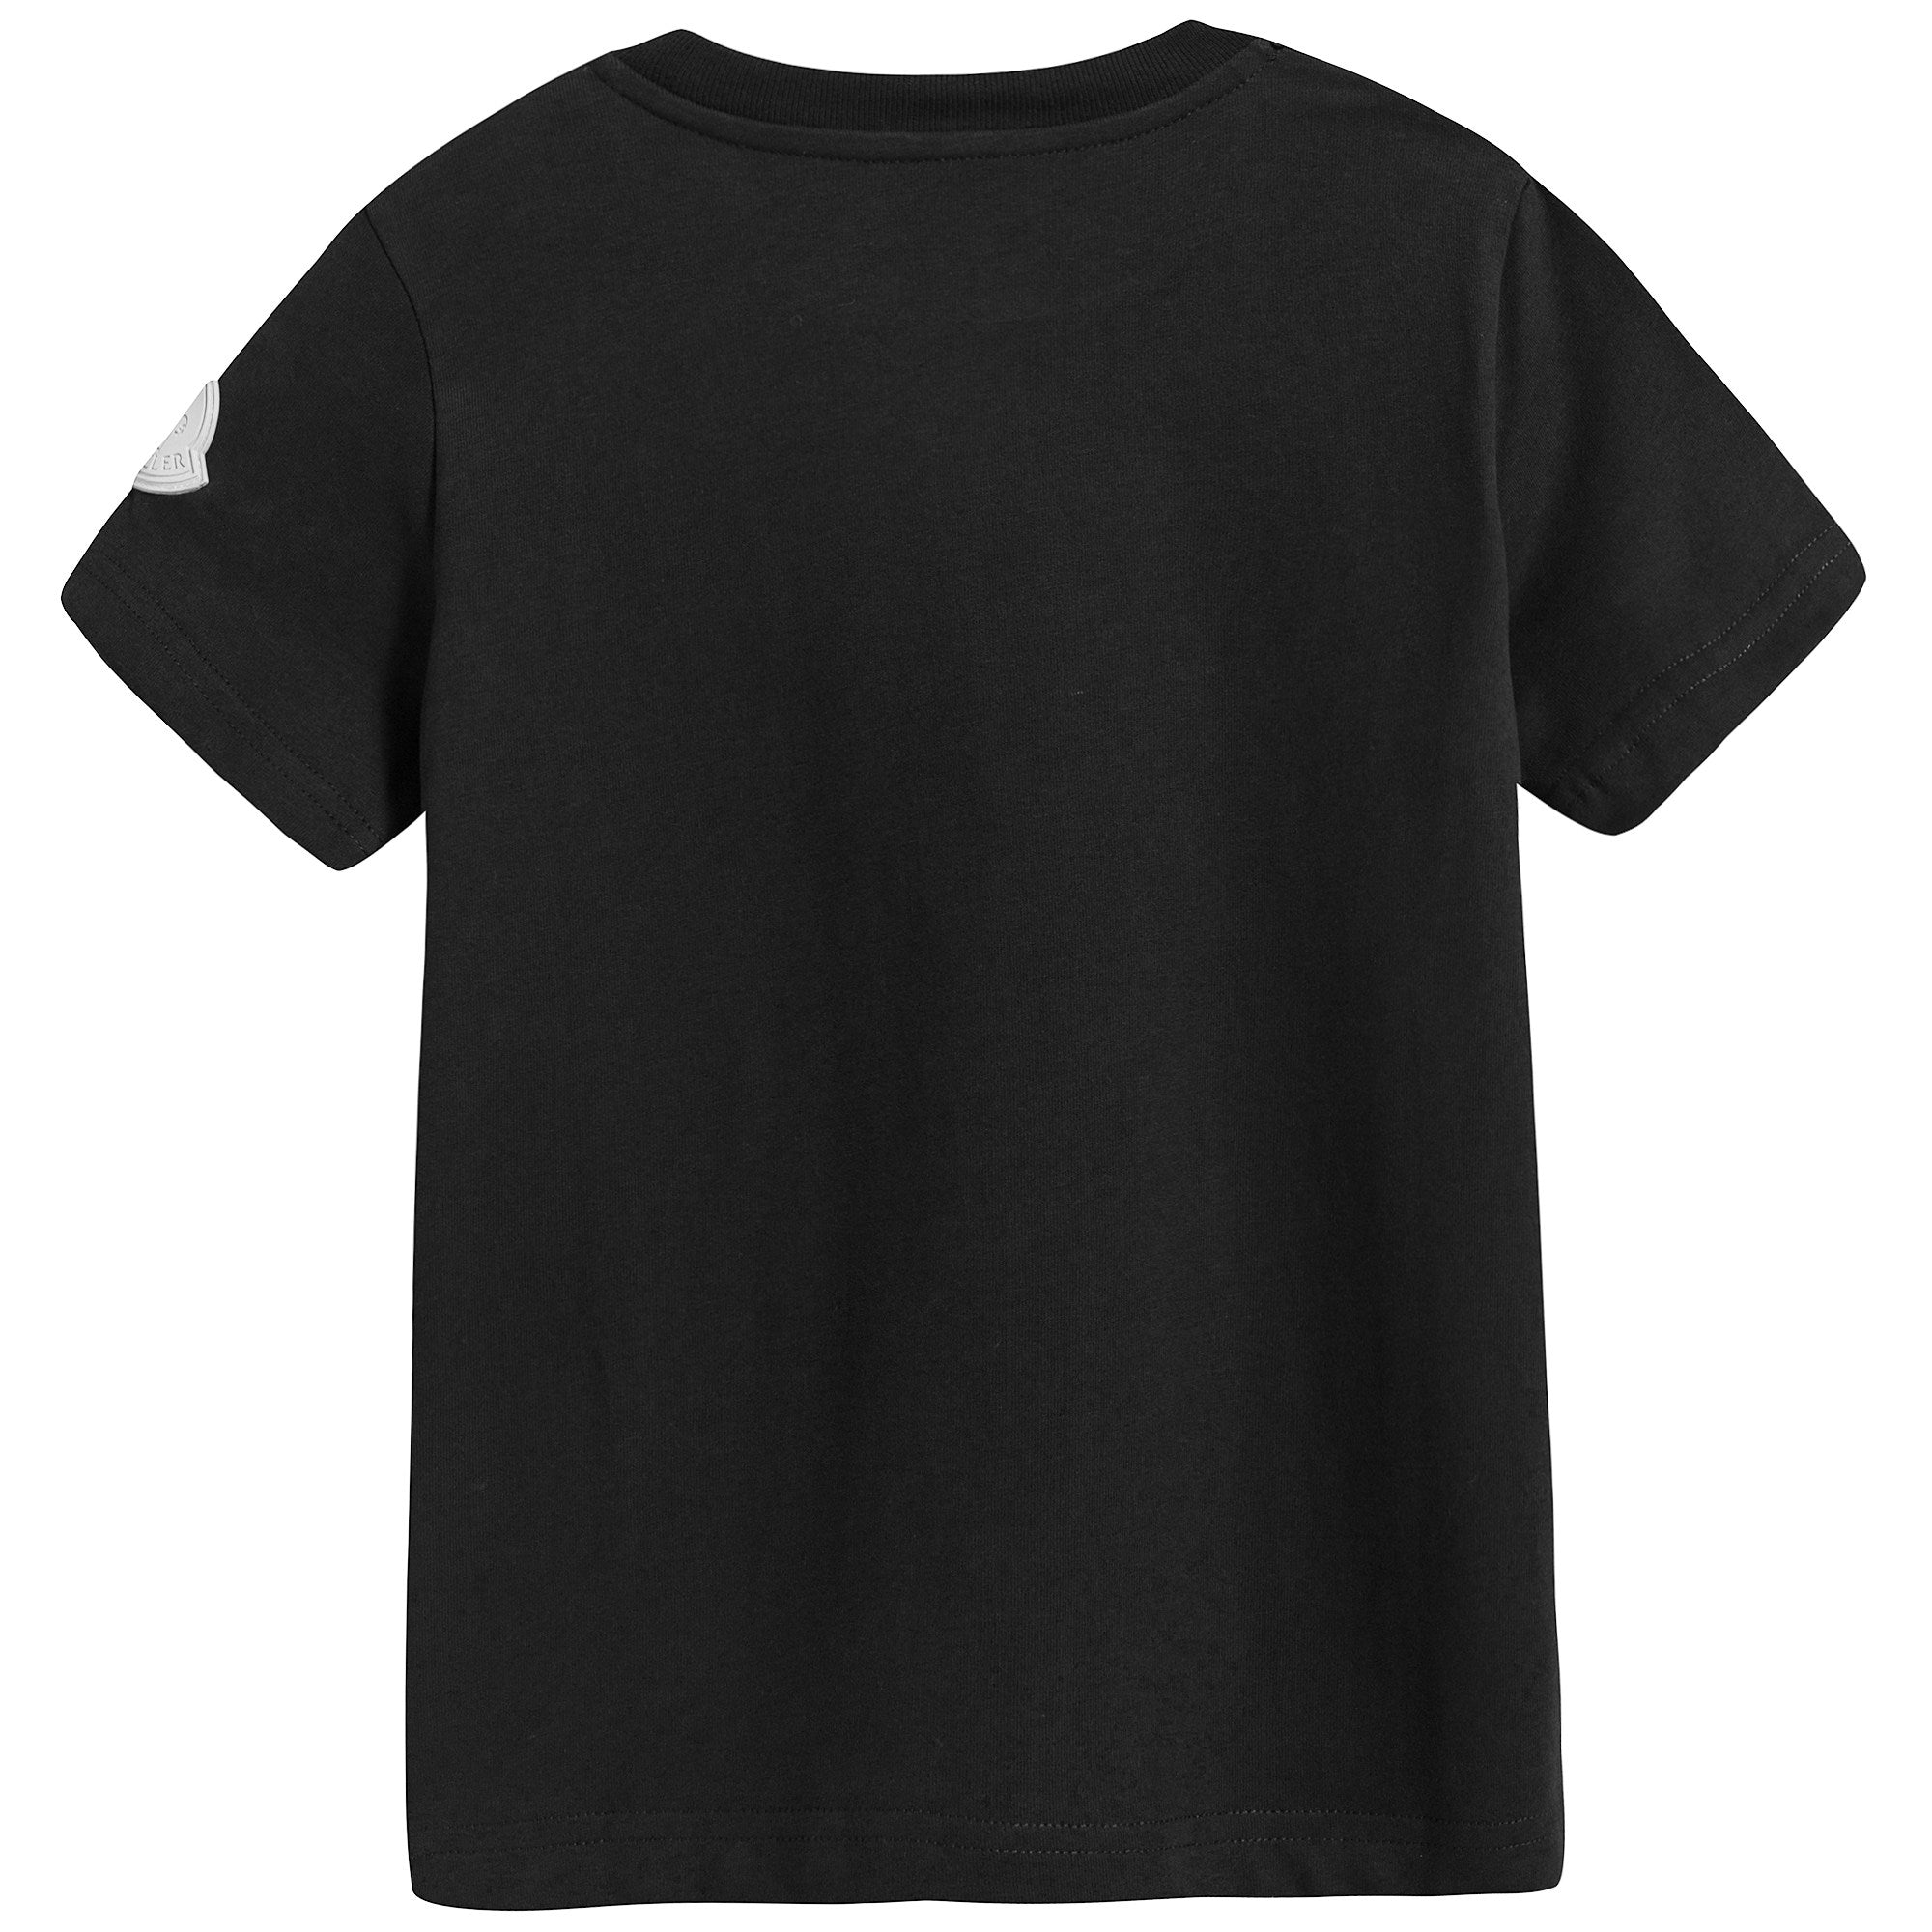 Boys Black "MAGLIA" Cotton T-shirt